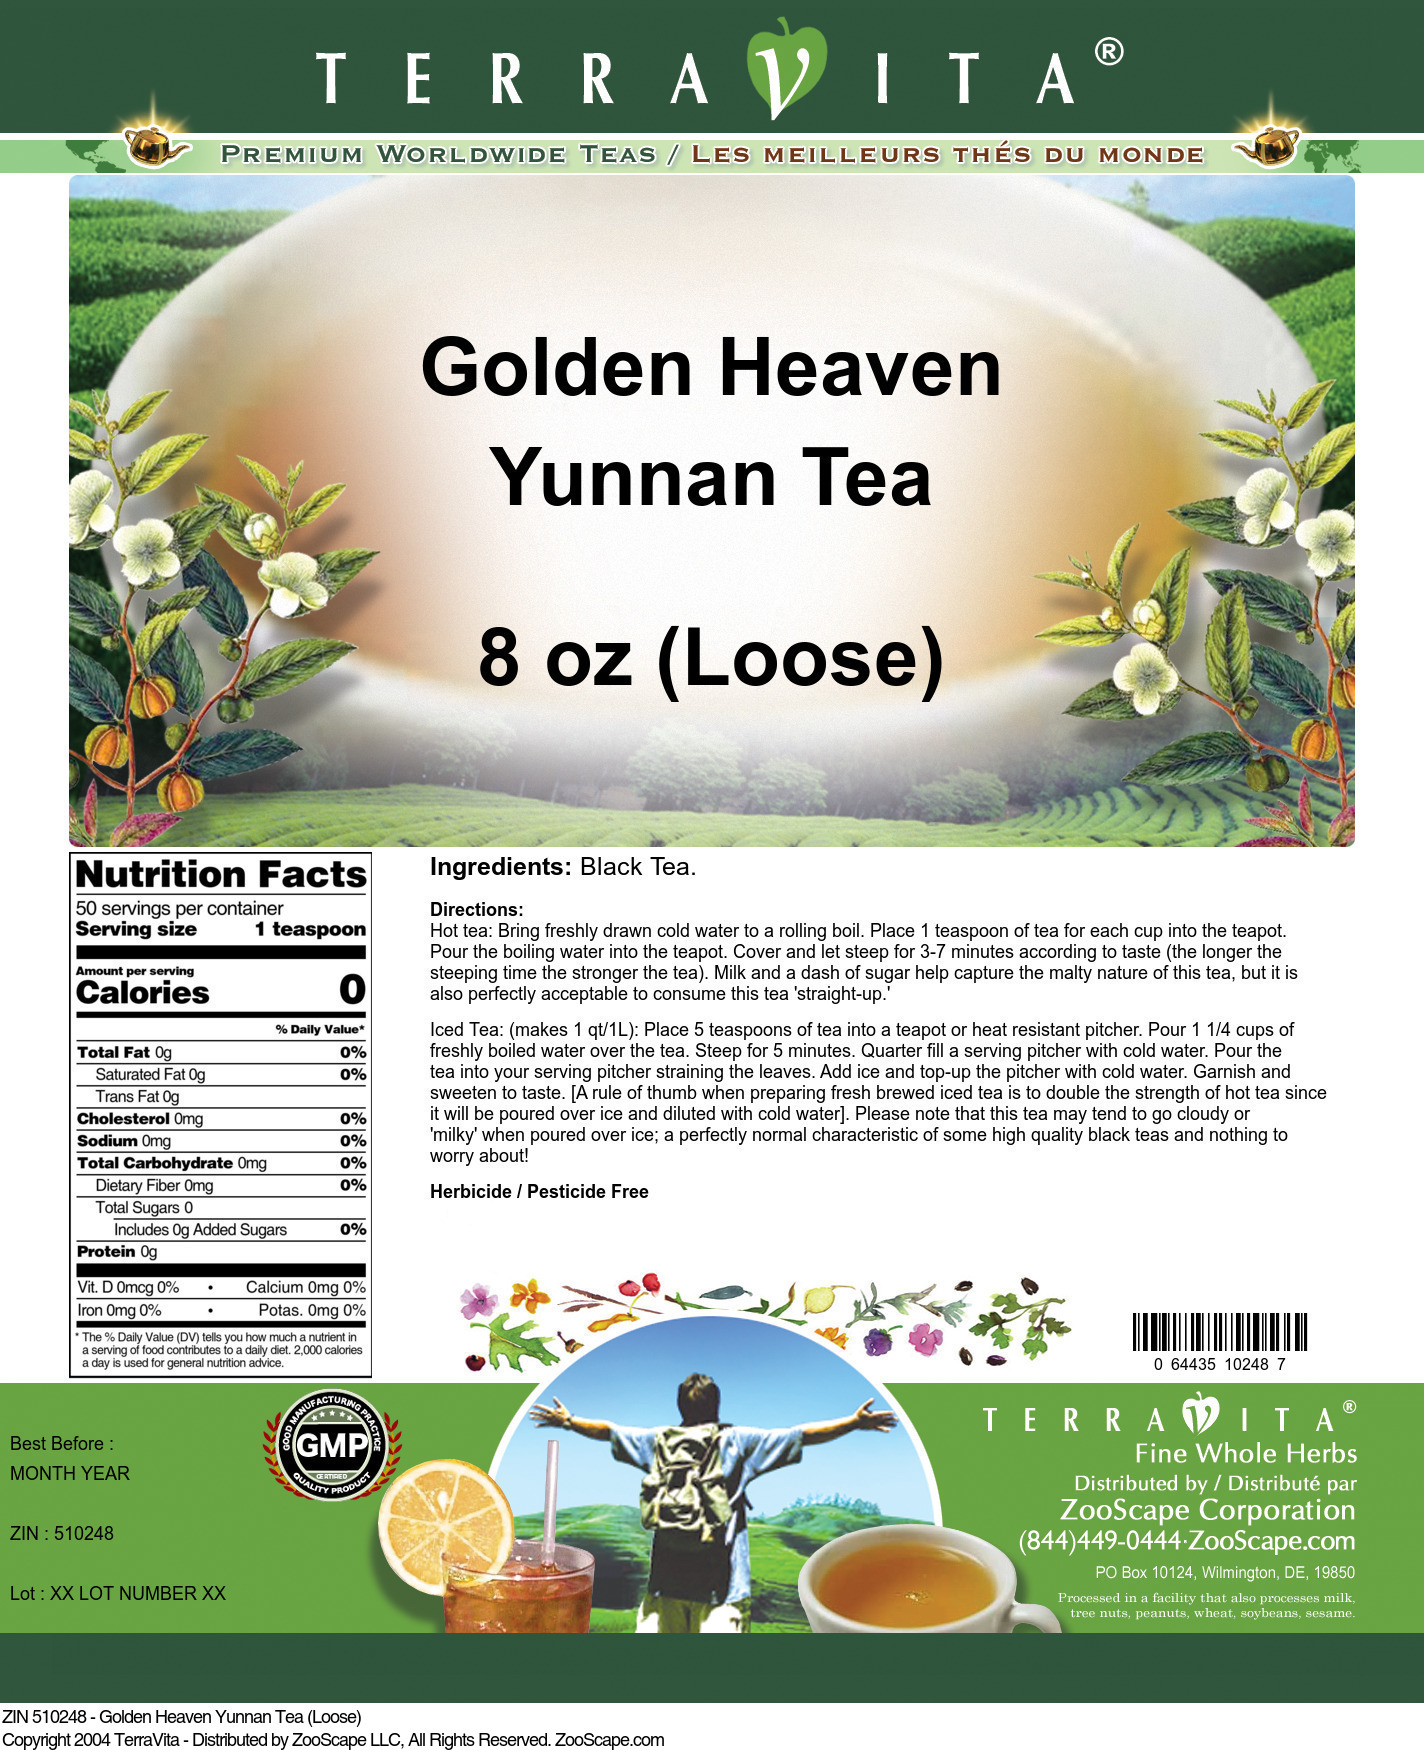 Golden Heaven Yunnan Tea (Loose) - Label